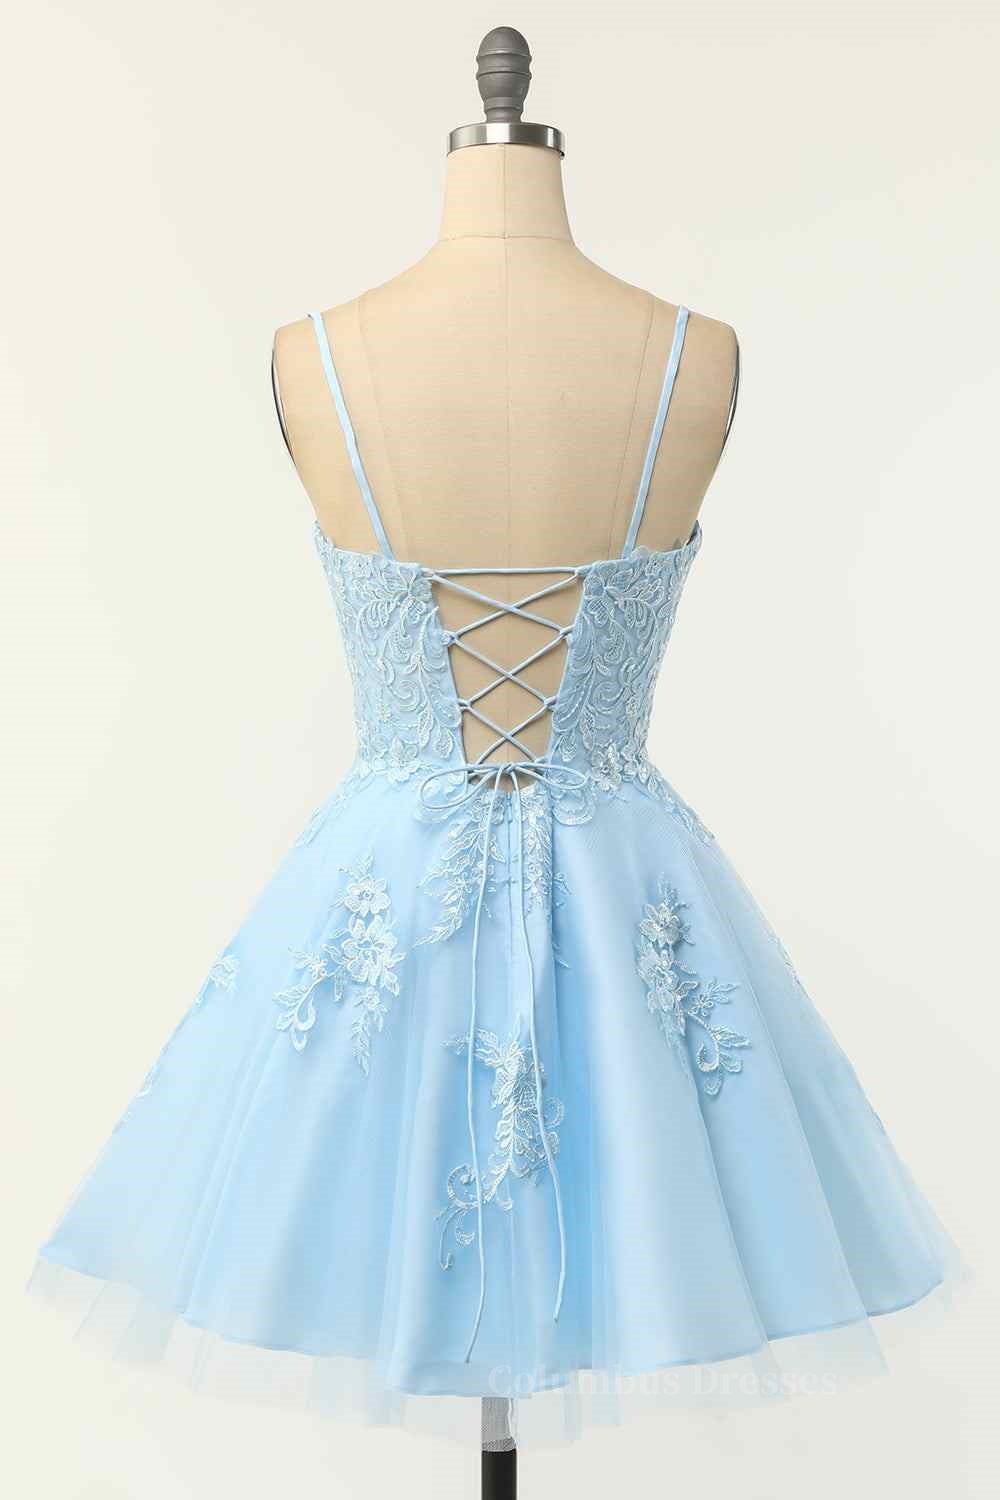 Rustic Wedding Dress, Light Blue A-line Spaghetti Straps Lace-Up Back Applique Mini Homecoming Dress